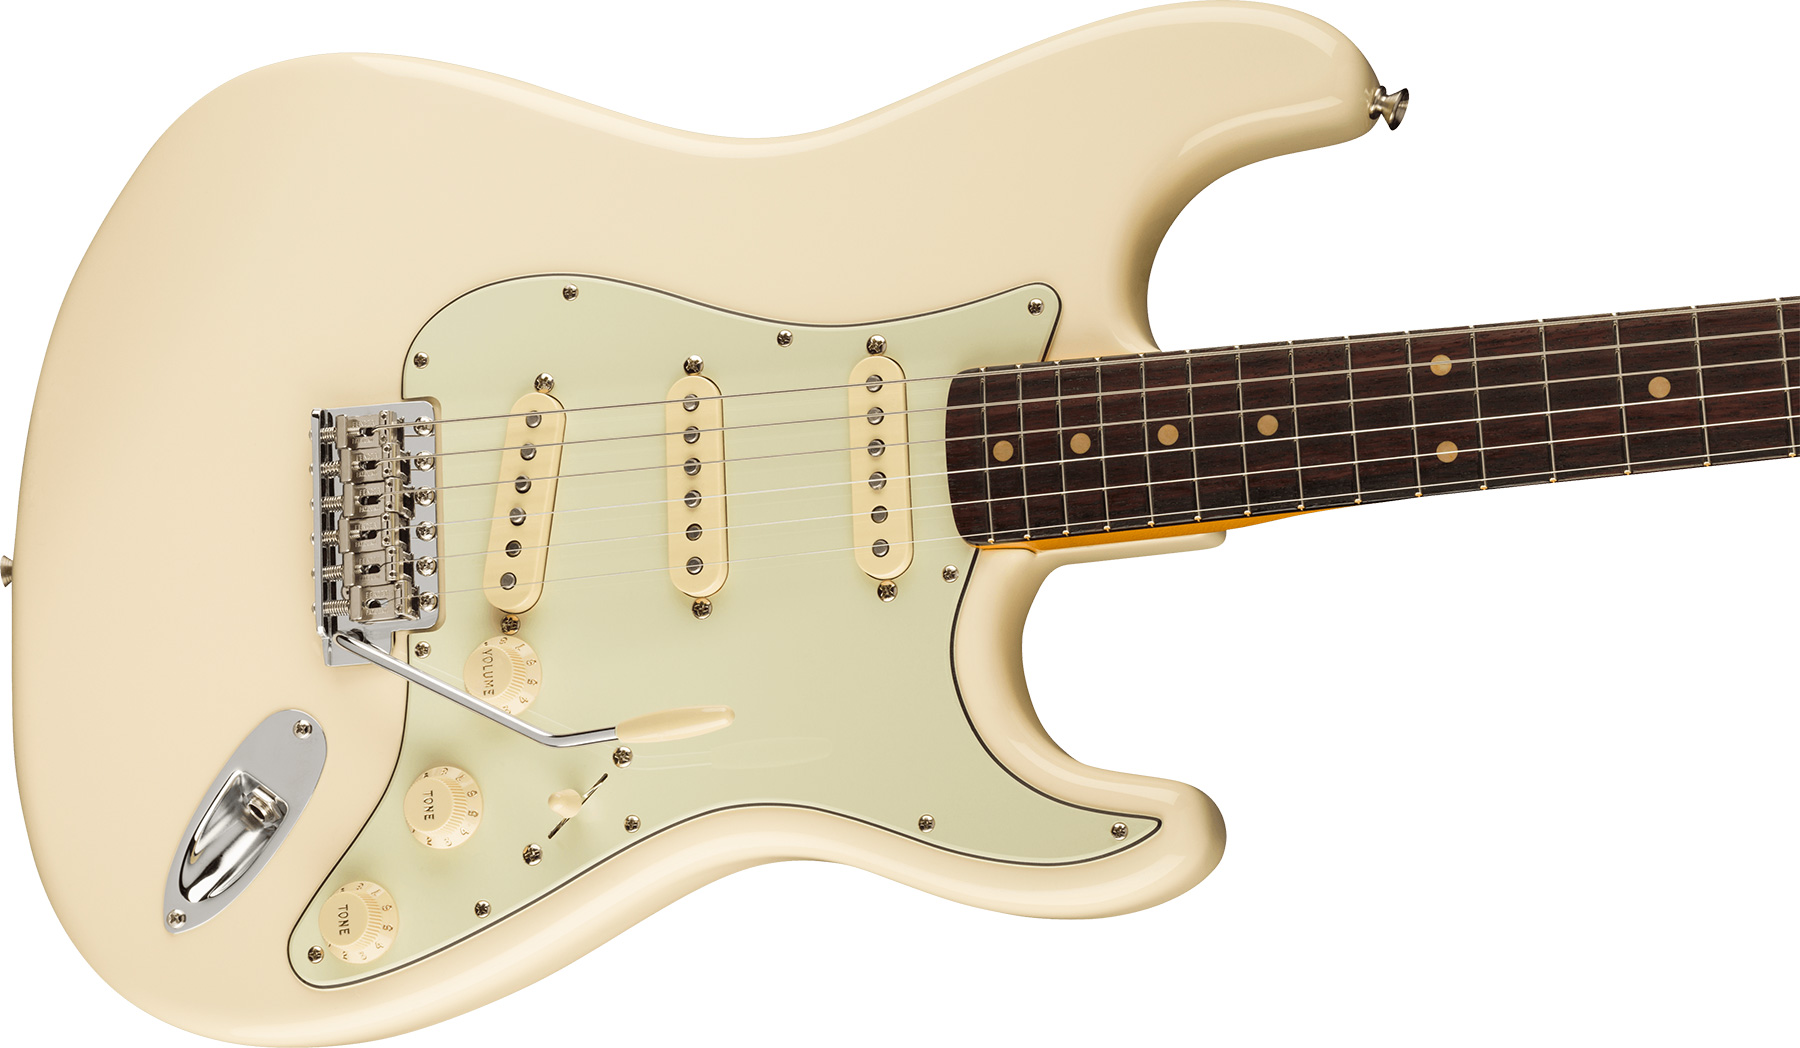 Fender Strat 1961 American Vintage Ii Usa 3s Trem Rw - Olympic White - Str shape electric guitar - Variation 2